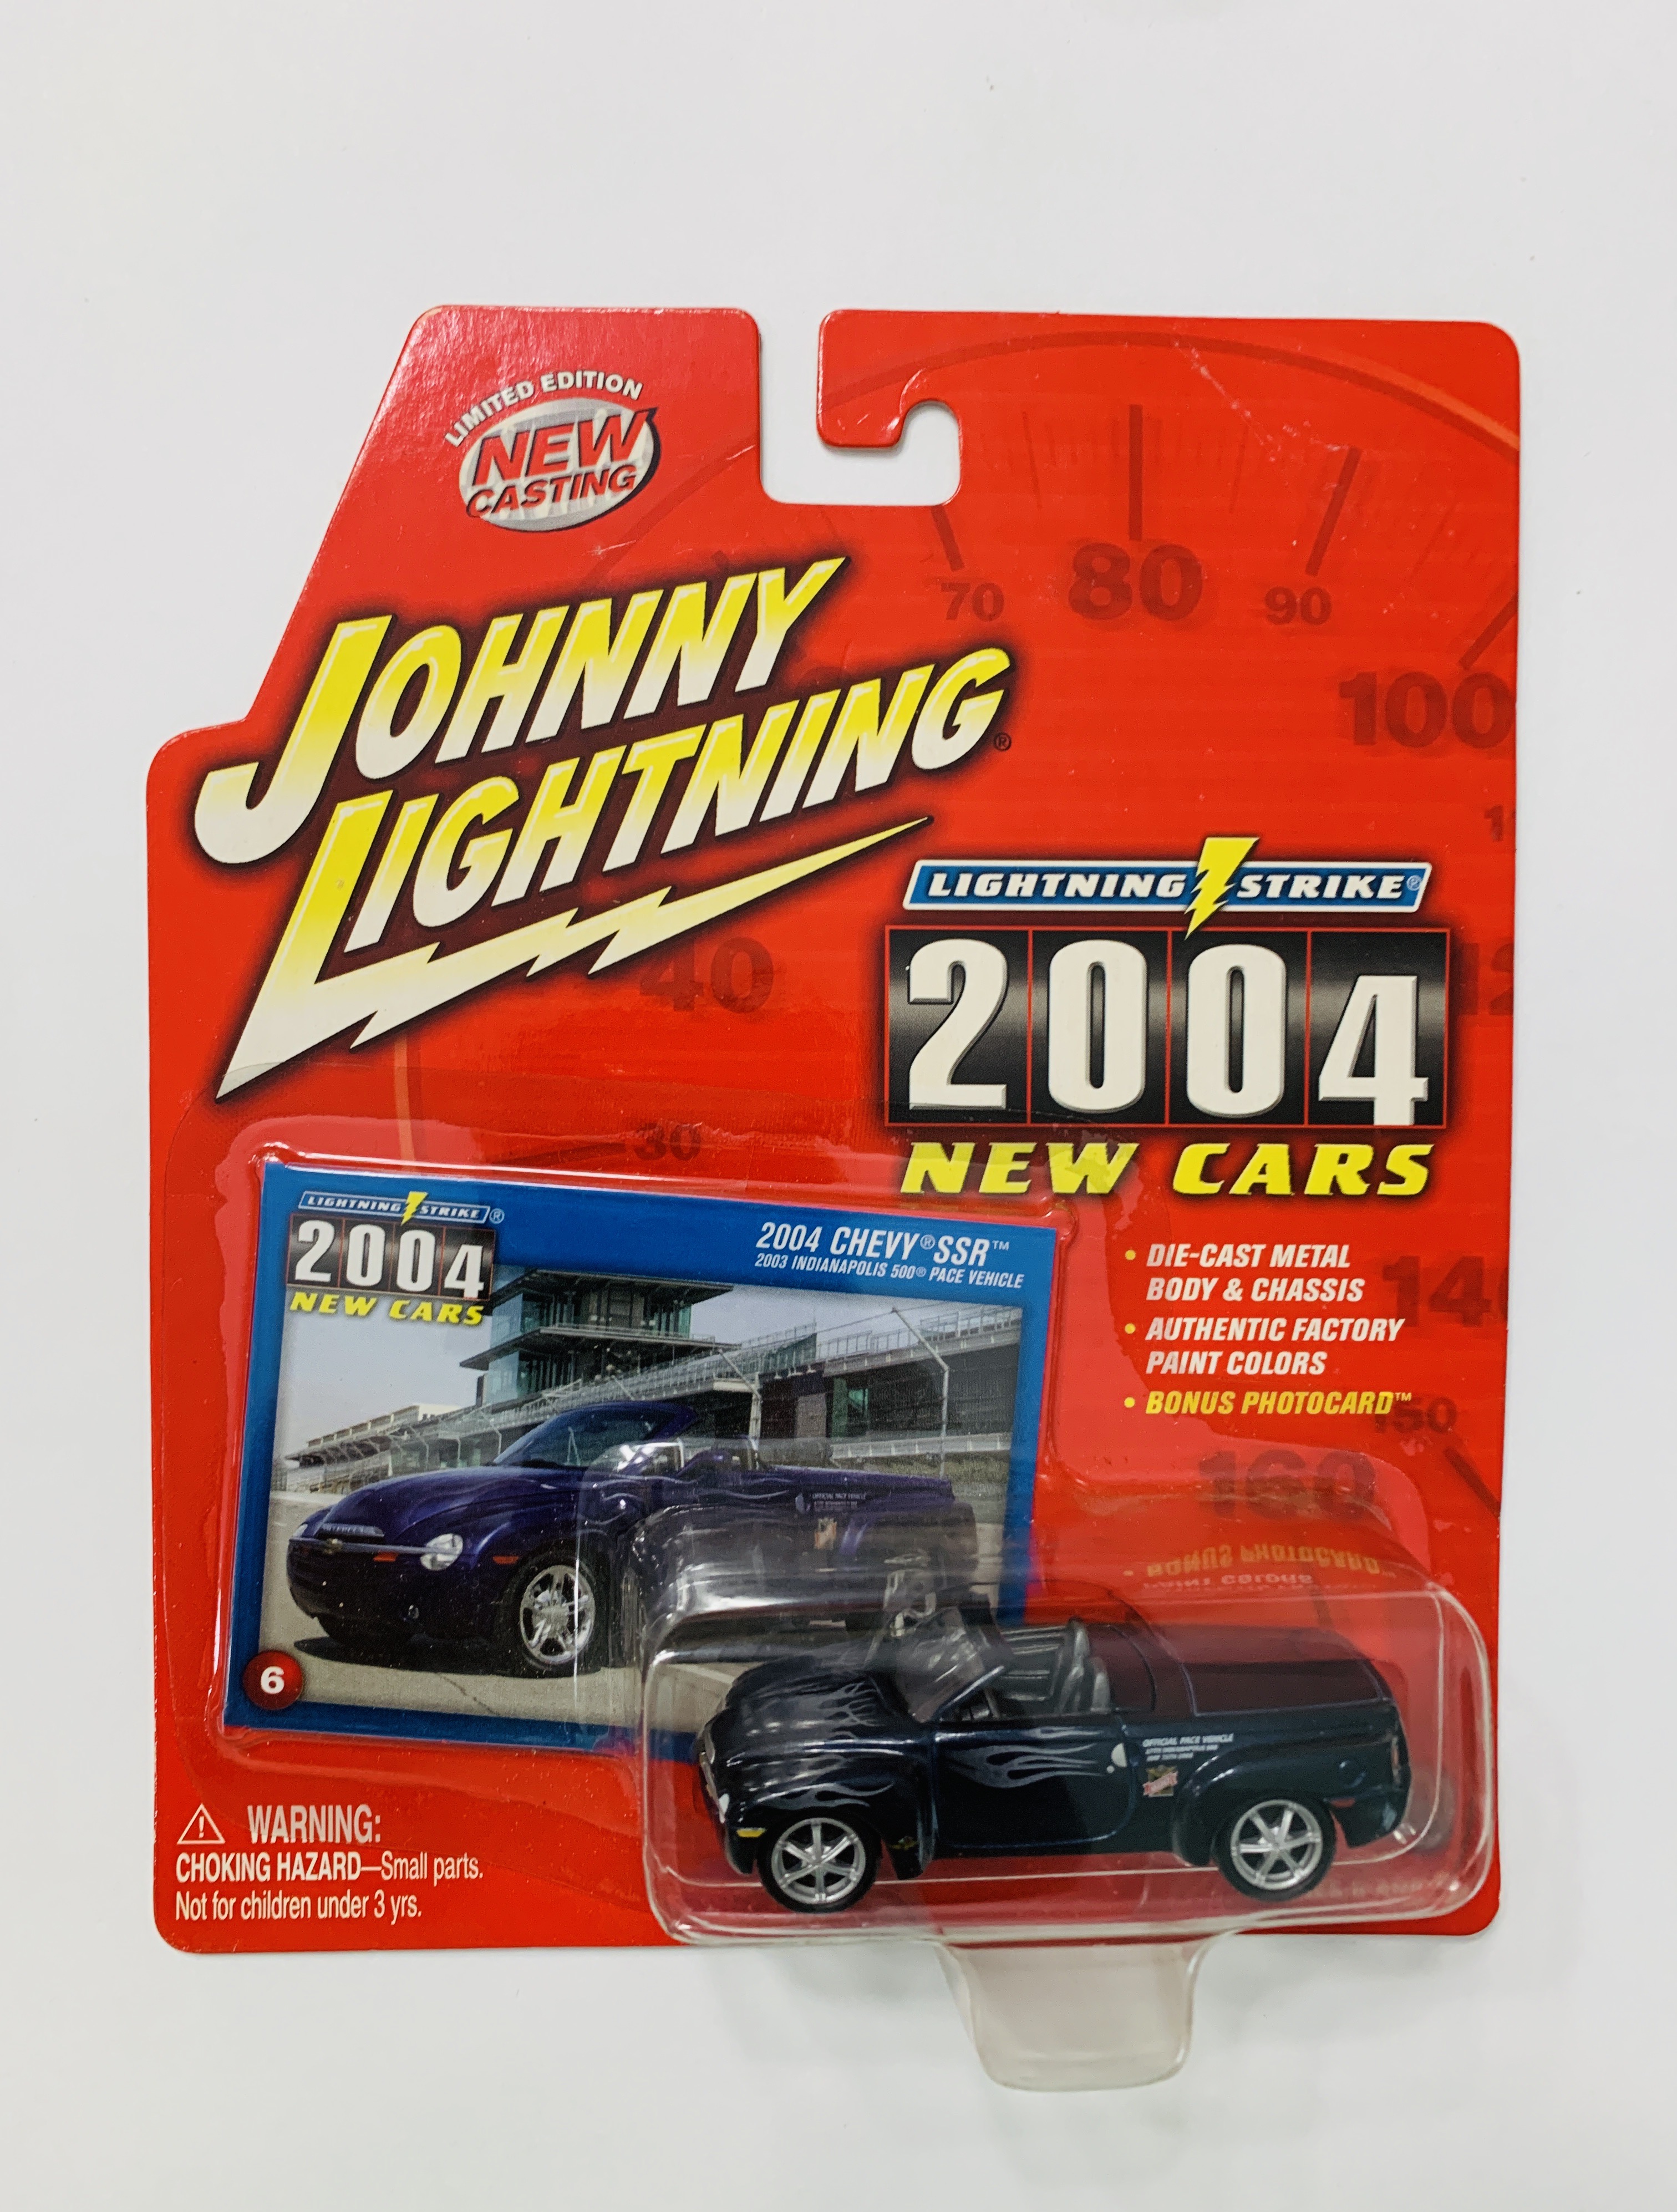 Johnny Lightning Lightning Strike 2004 New Cars 2004 Chevy SSR - Blue